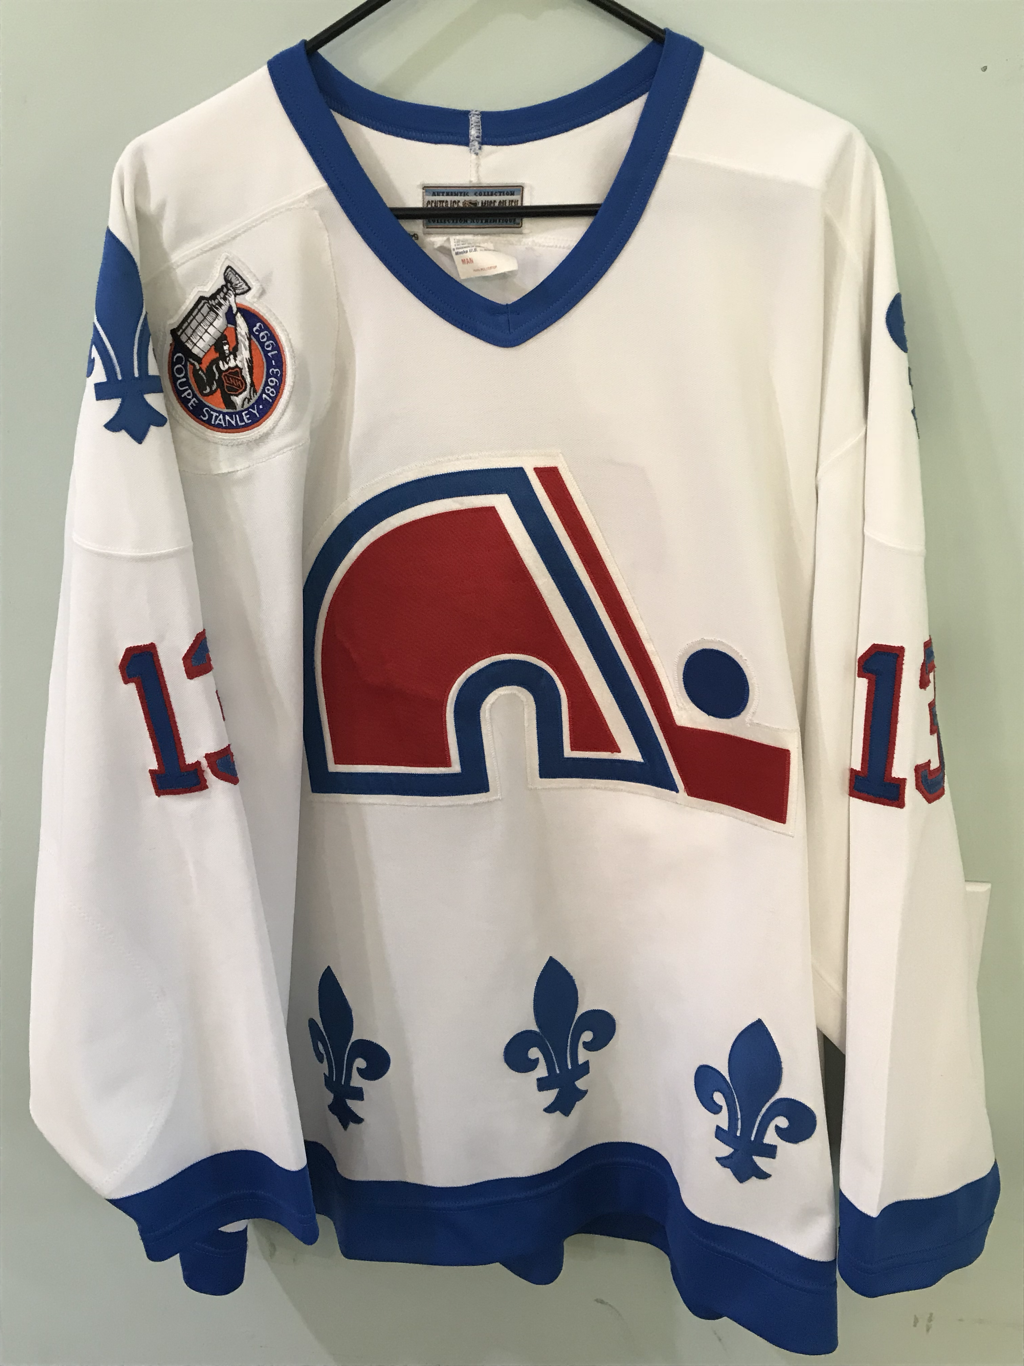 Mats Sundin - Quebec Nordiques 1991-92, 1992-93 - Christopher's Gamers